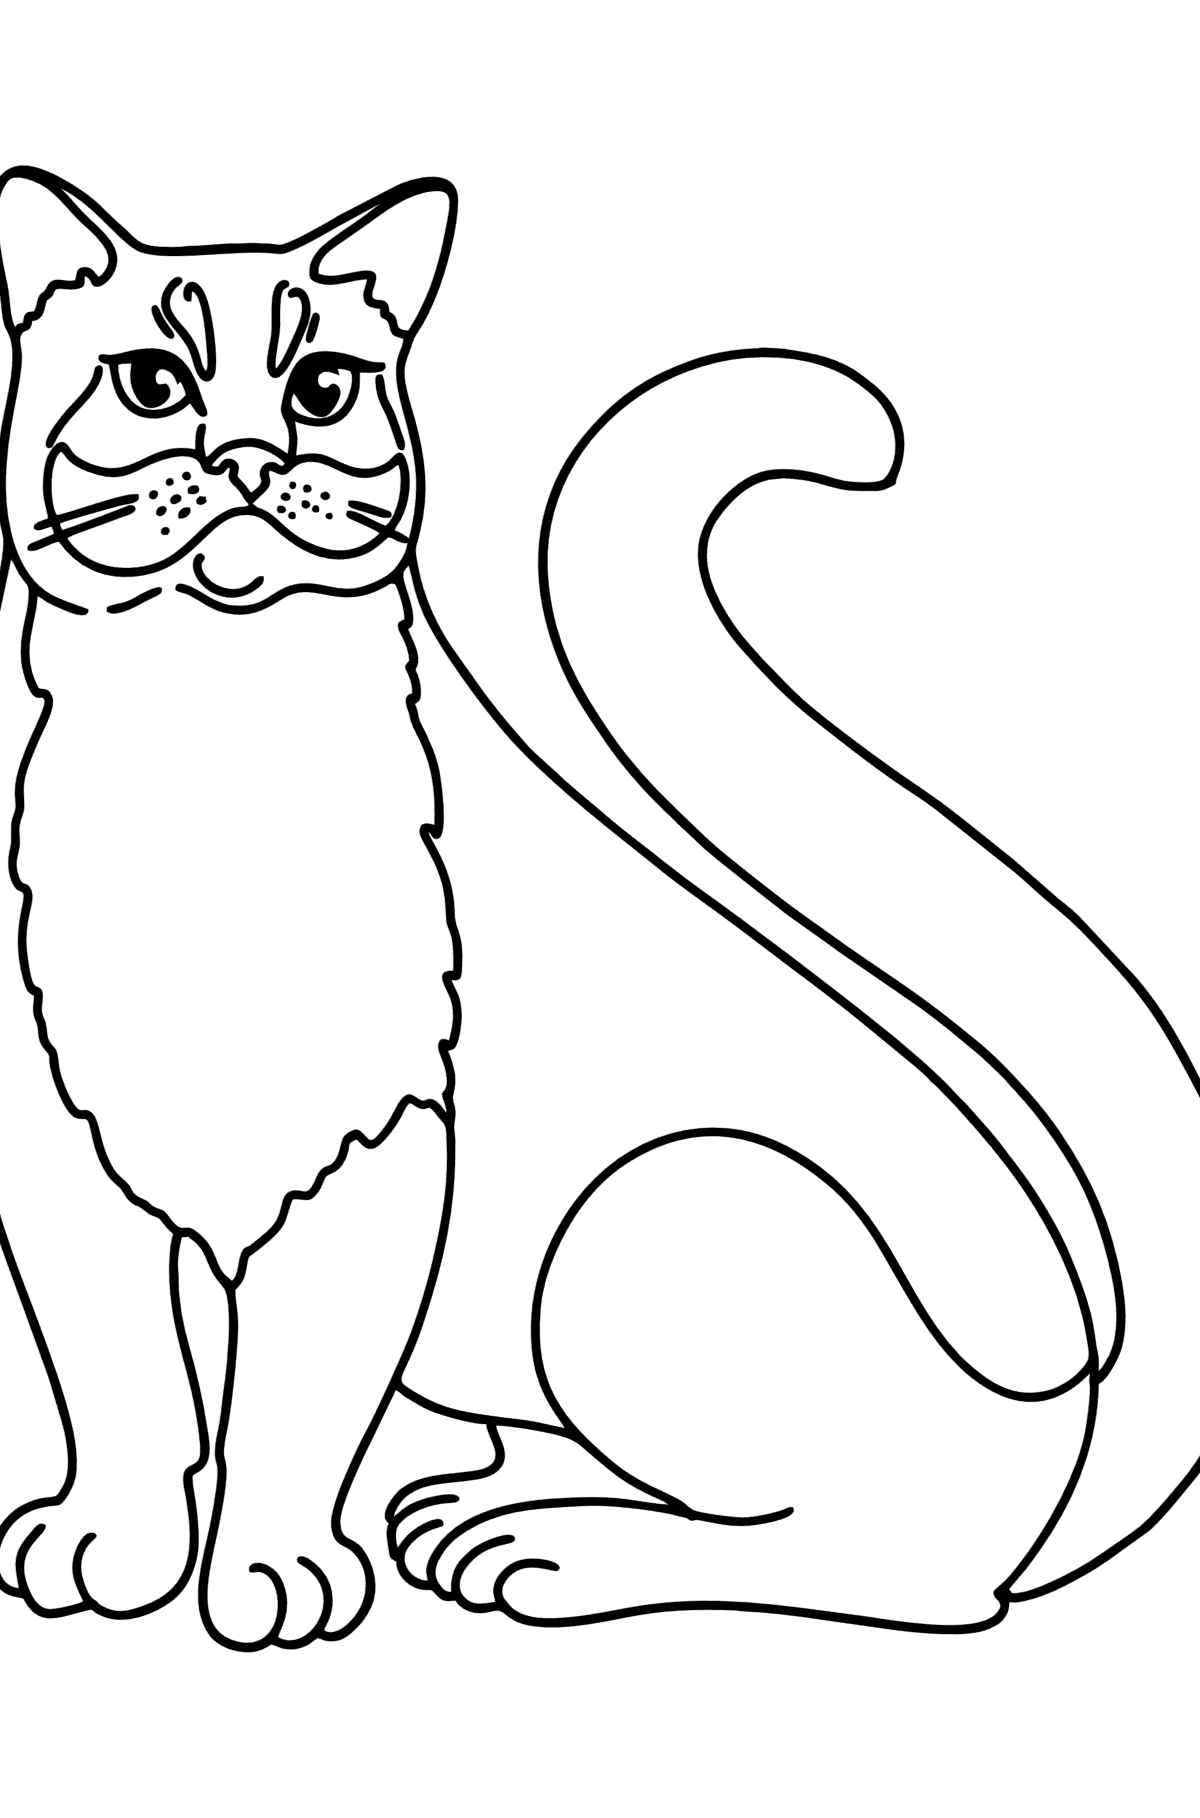 Dibujo de Gato Azul Ruso para colorear - Dibujos para Colorear para Niños